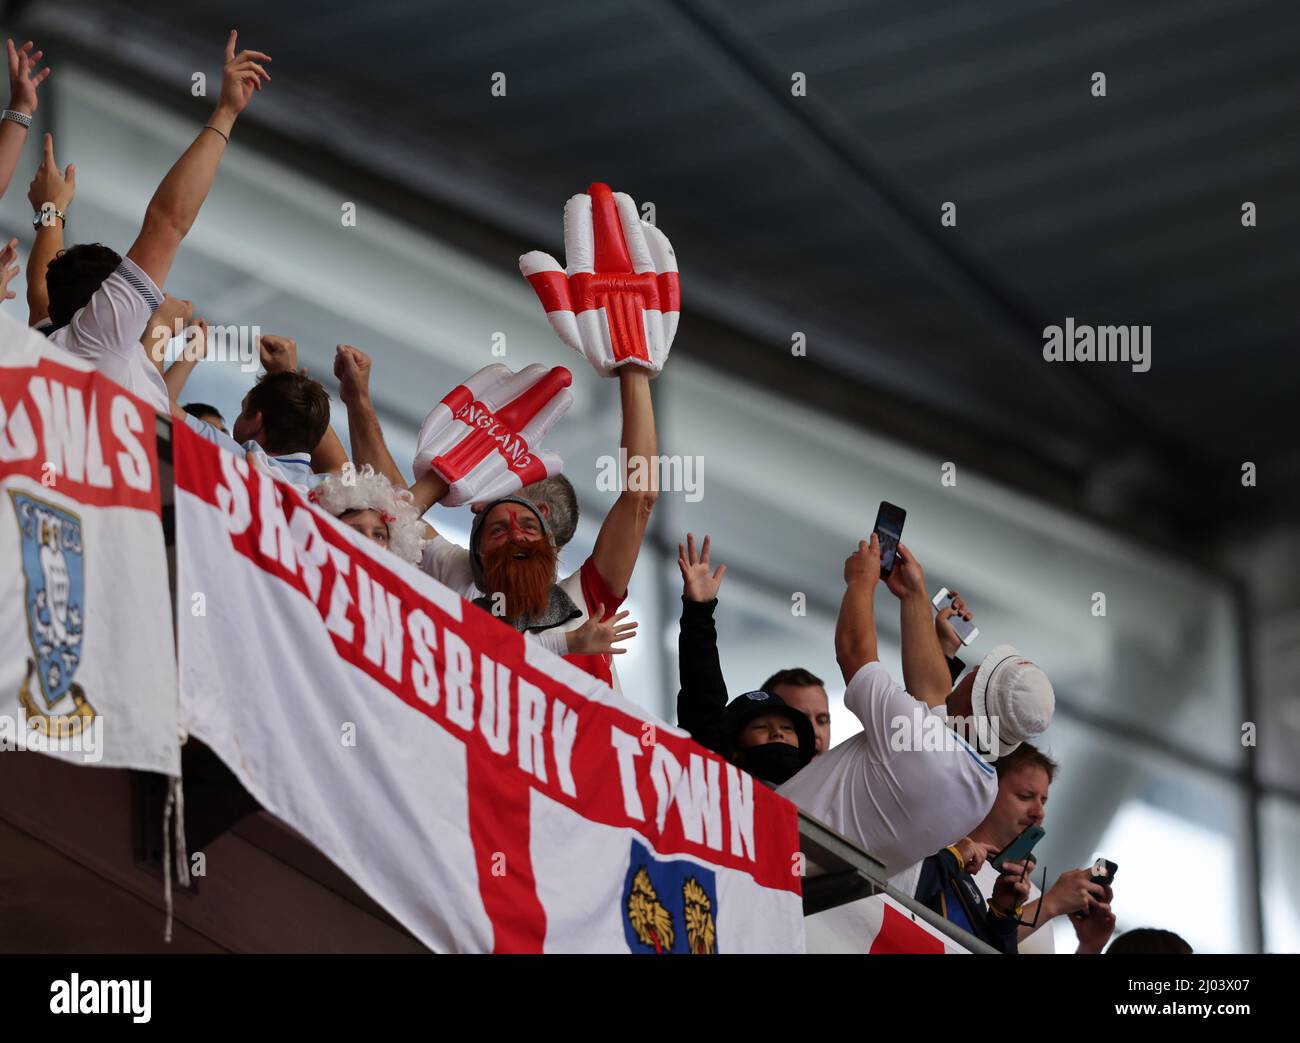 england FANS UEFA Euro 2020 Stadion Wembley 29.6.2021 Fussball LŠnderspiel England - Deutschland Deutschland Achtelfinale © diebilderwelt / Alamy Stock Stockfoto